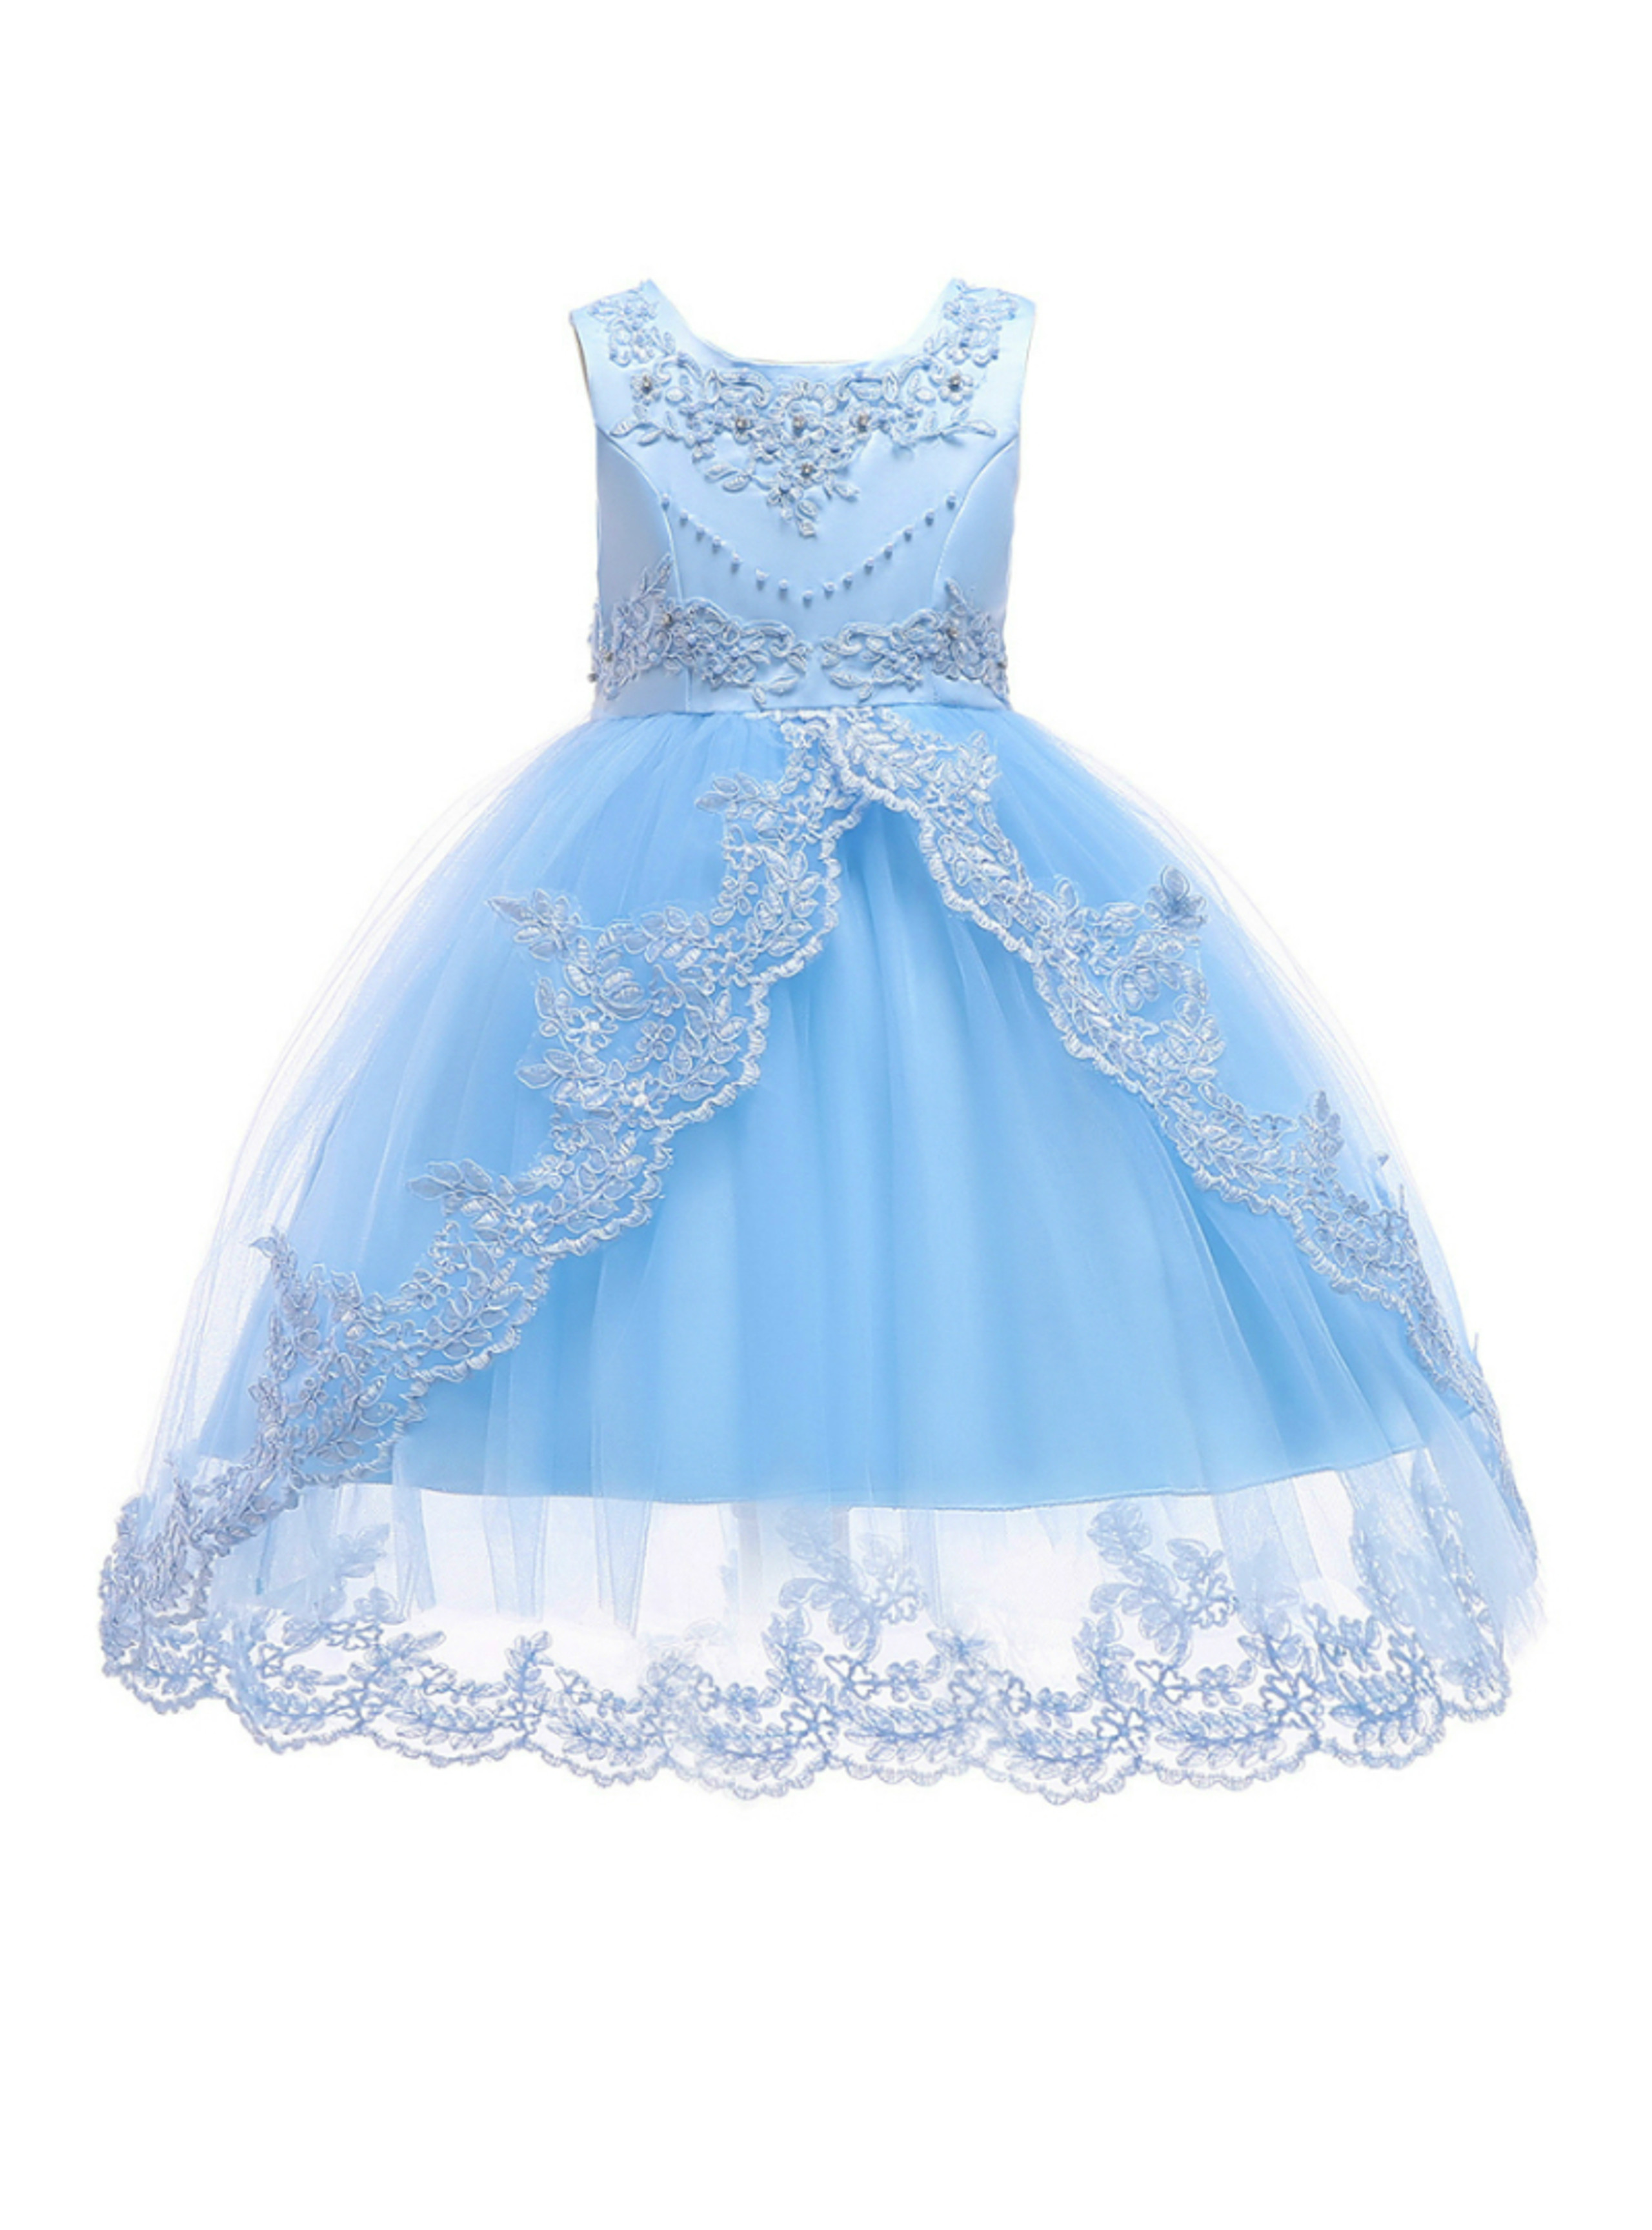 Cheap Princess Dresses,Wholesale Princess Dress,Disney Princess Costume